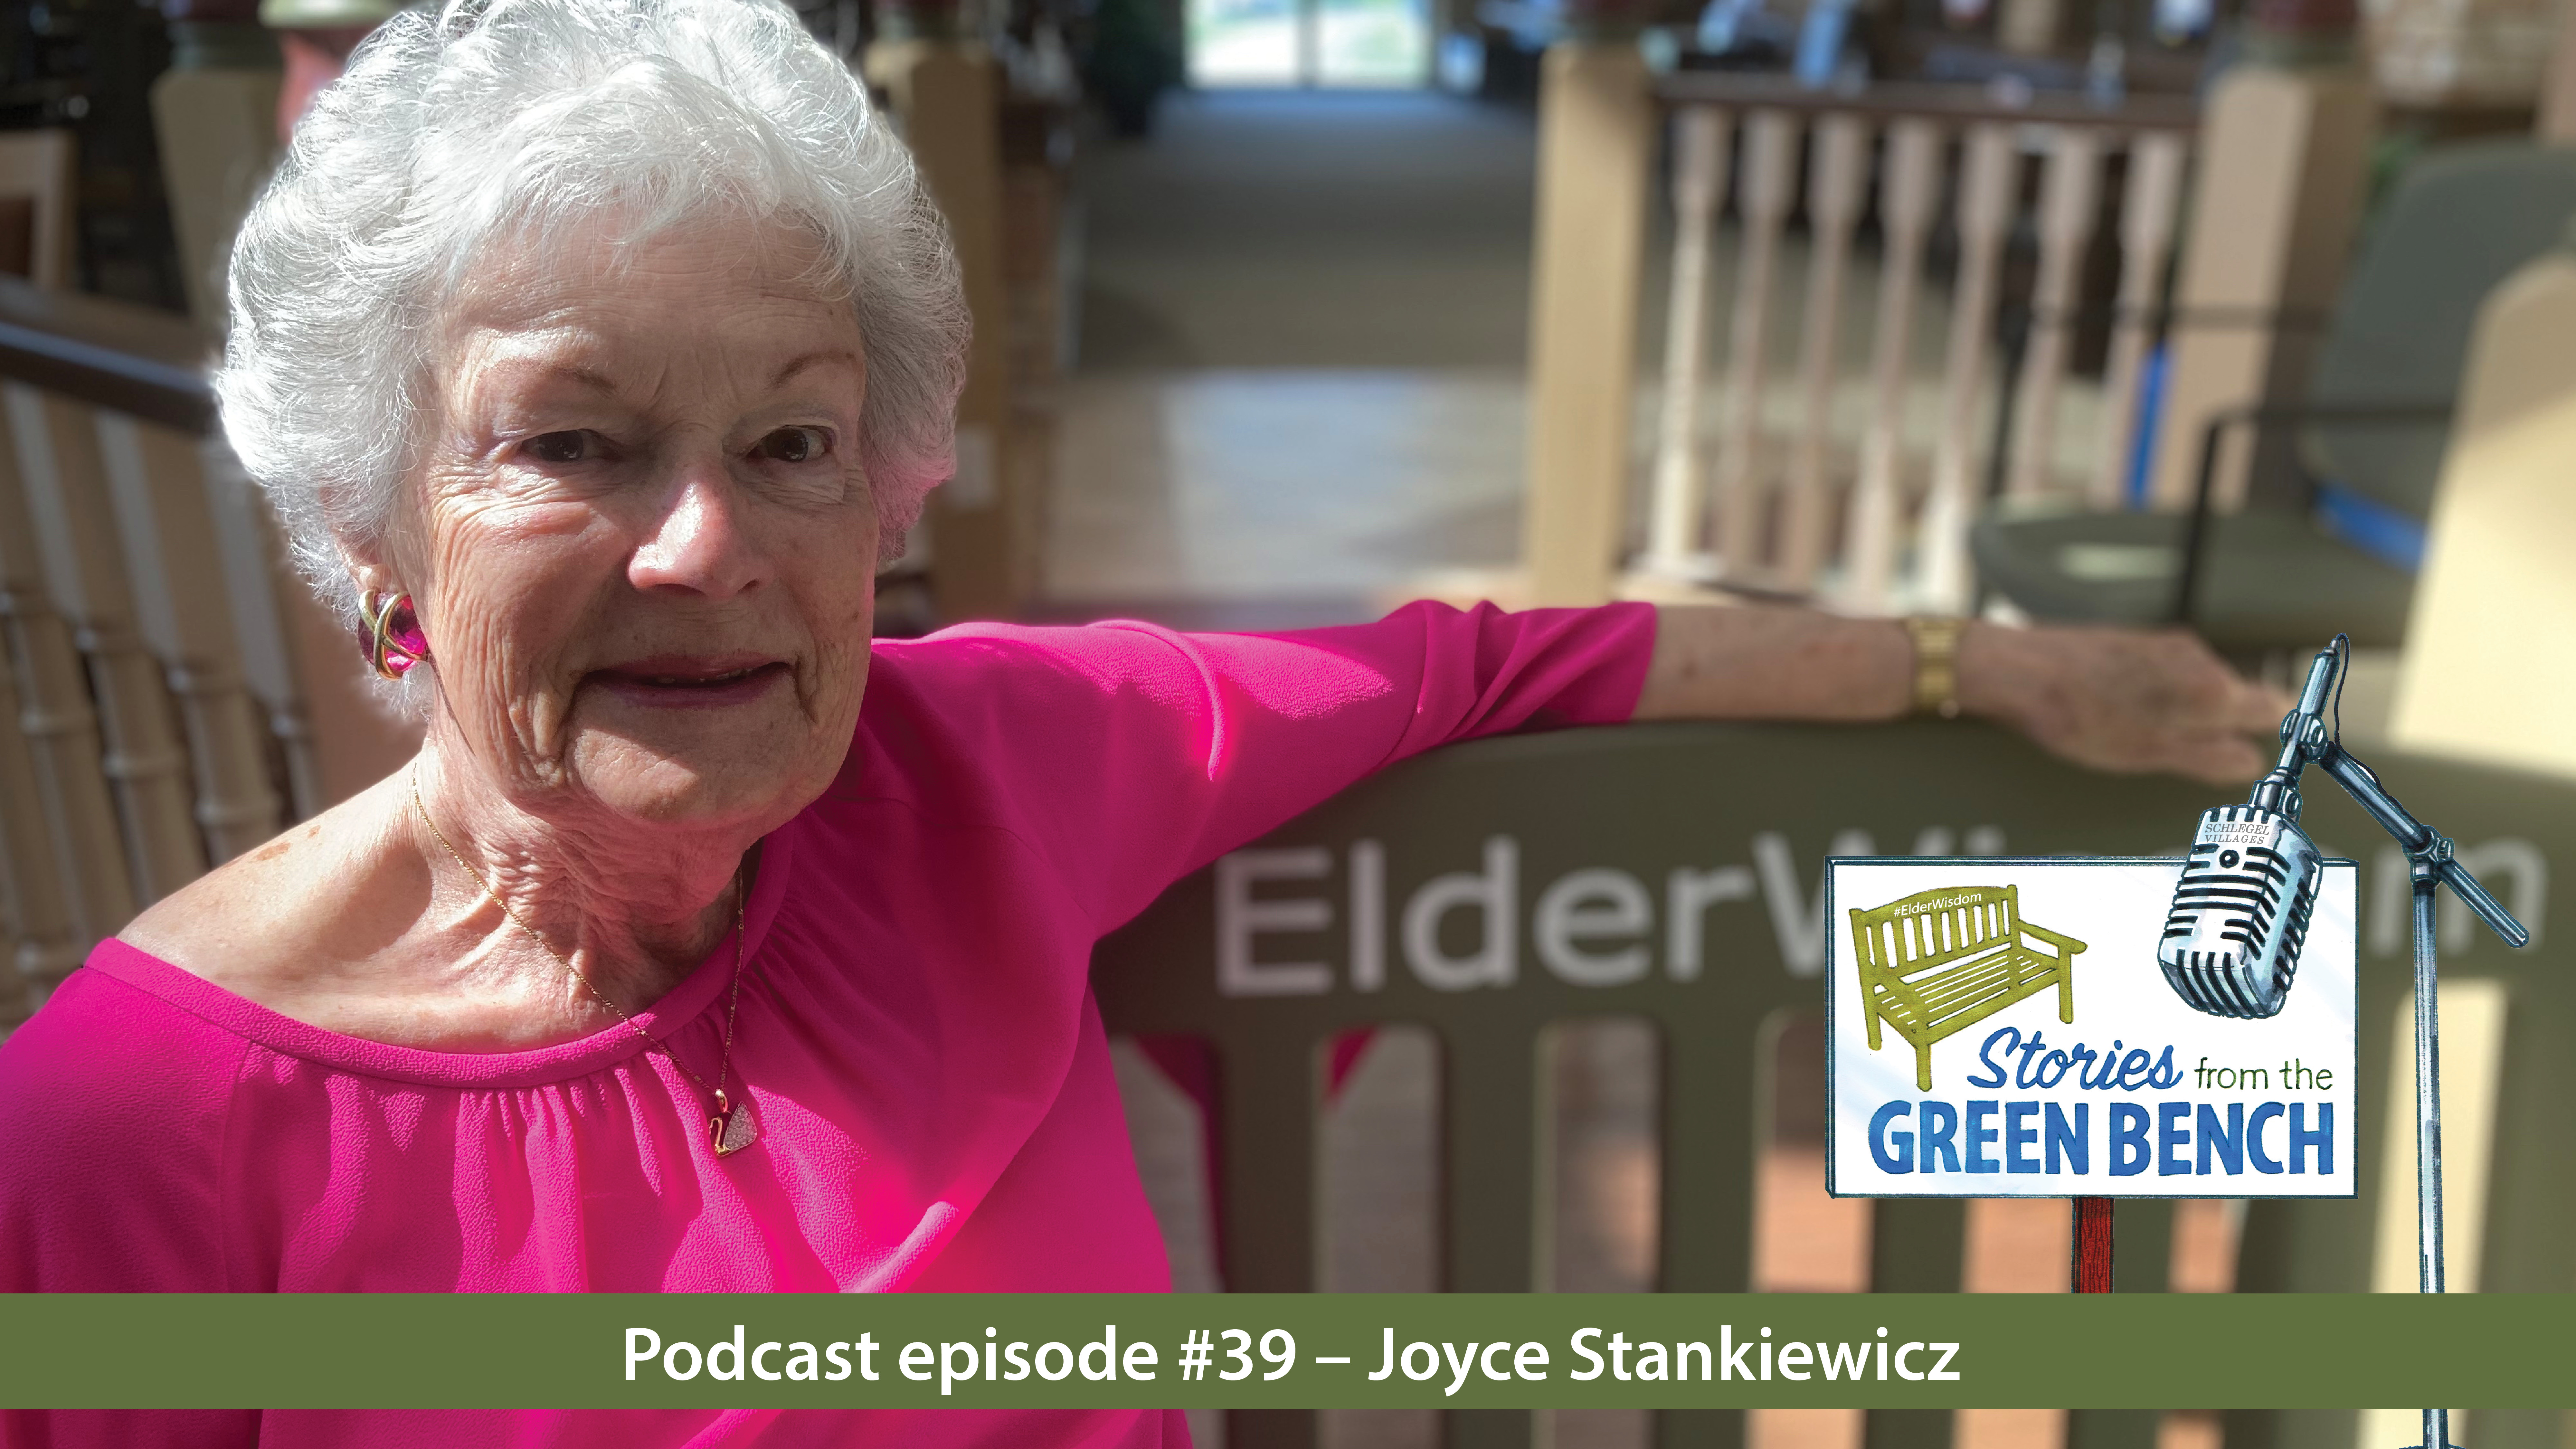 Joyce Stankiewicz shares her story from the green bench on the #ElderWisdom podcast